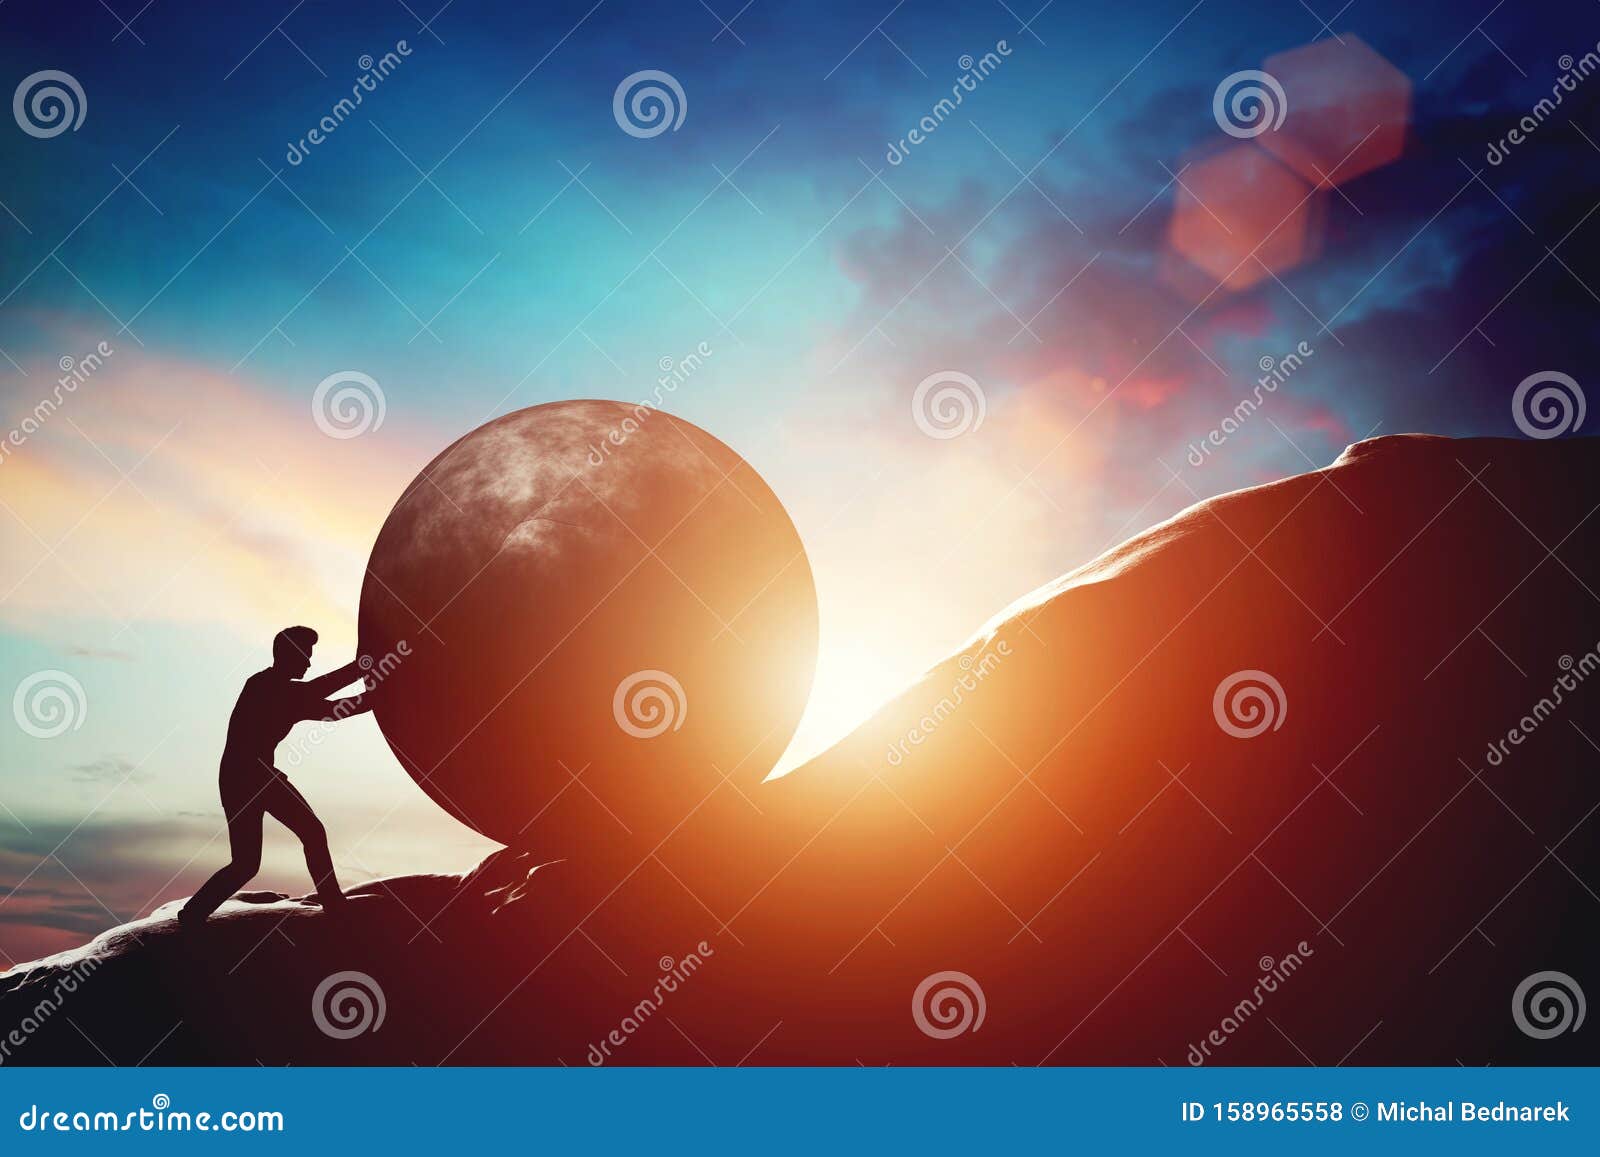 man pushing huge concrete ball up hill